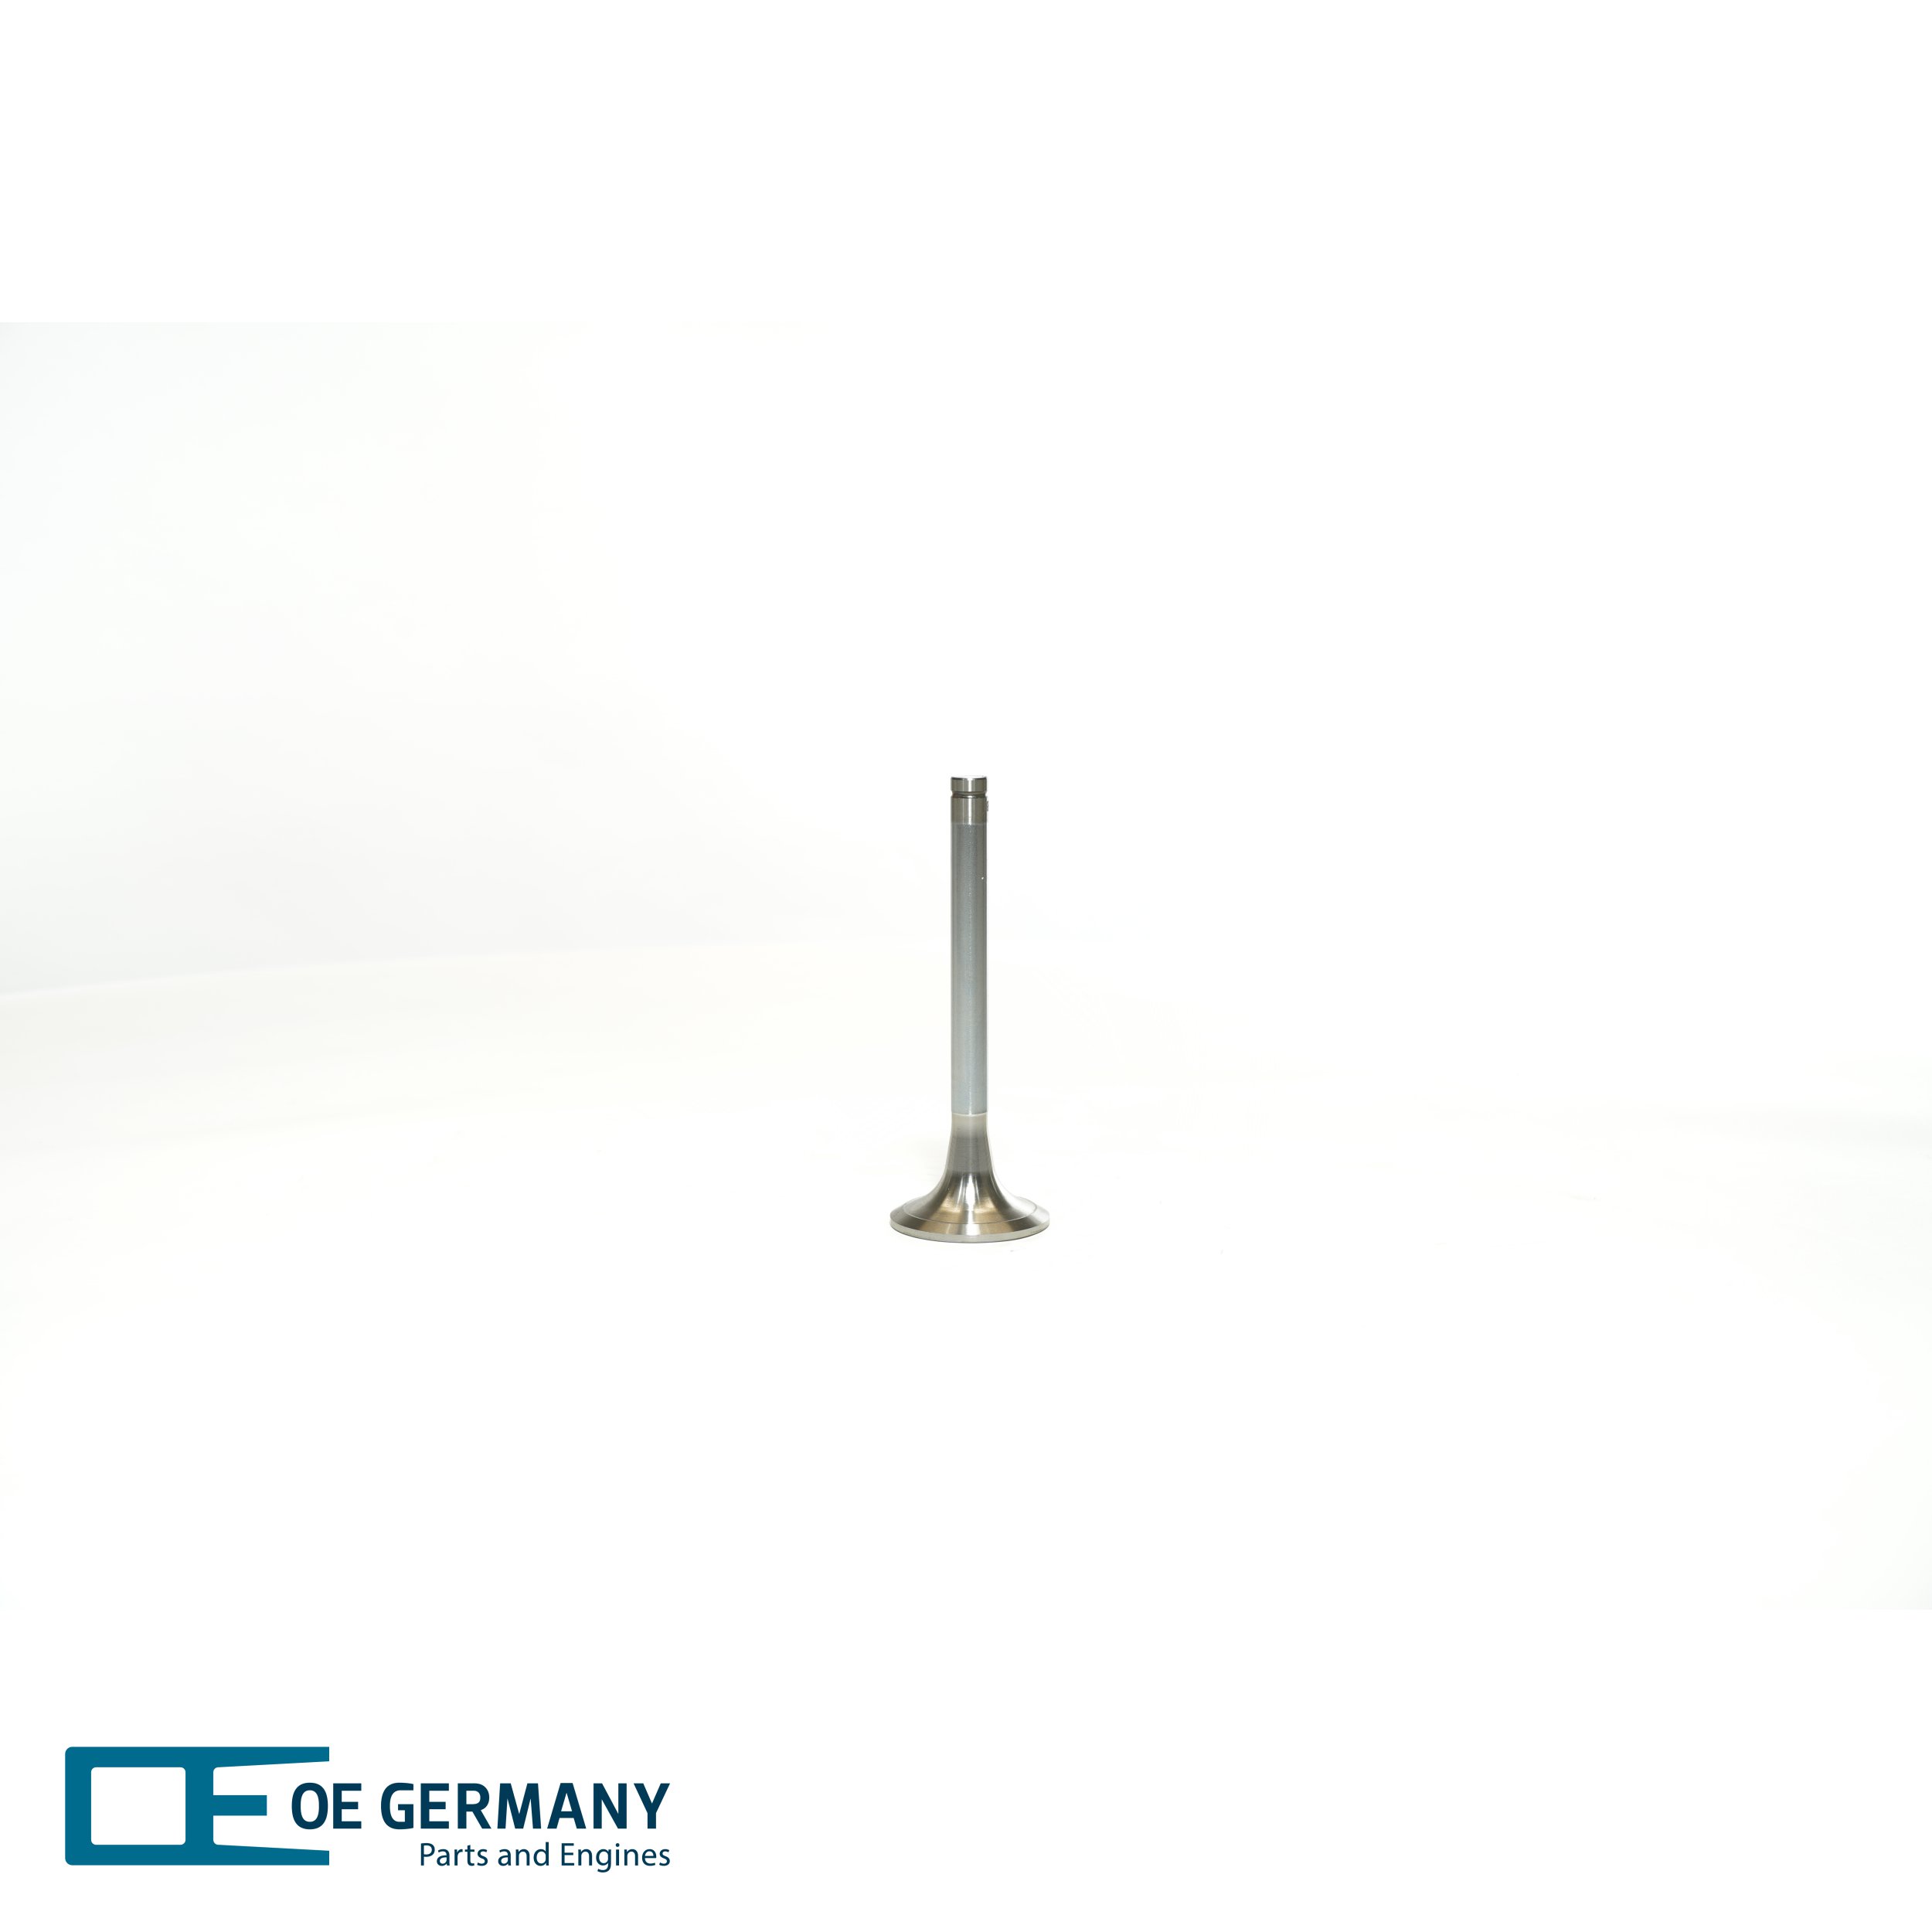 OE Germany 51 mm, Auslassseite Auslassventil 02 0520 280001 kaufen